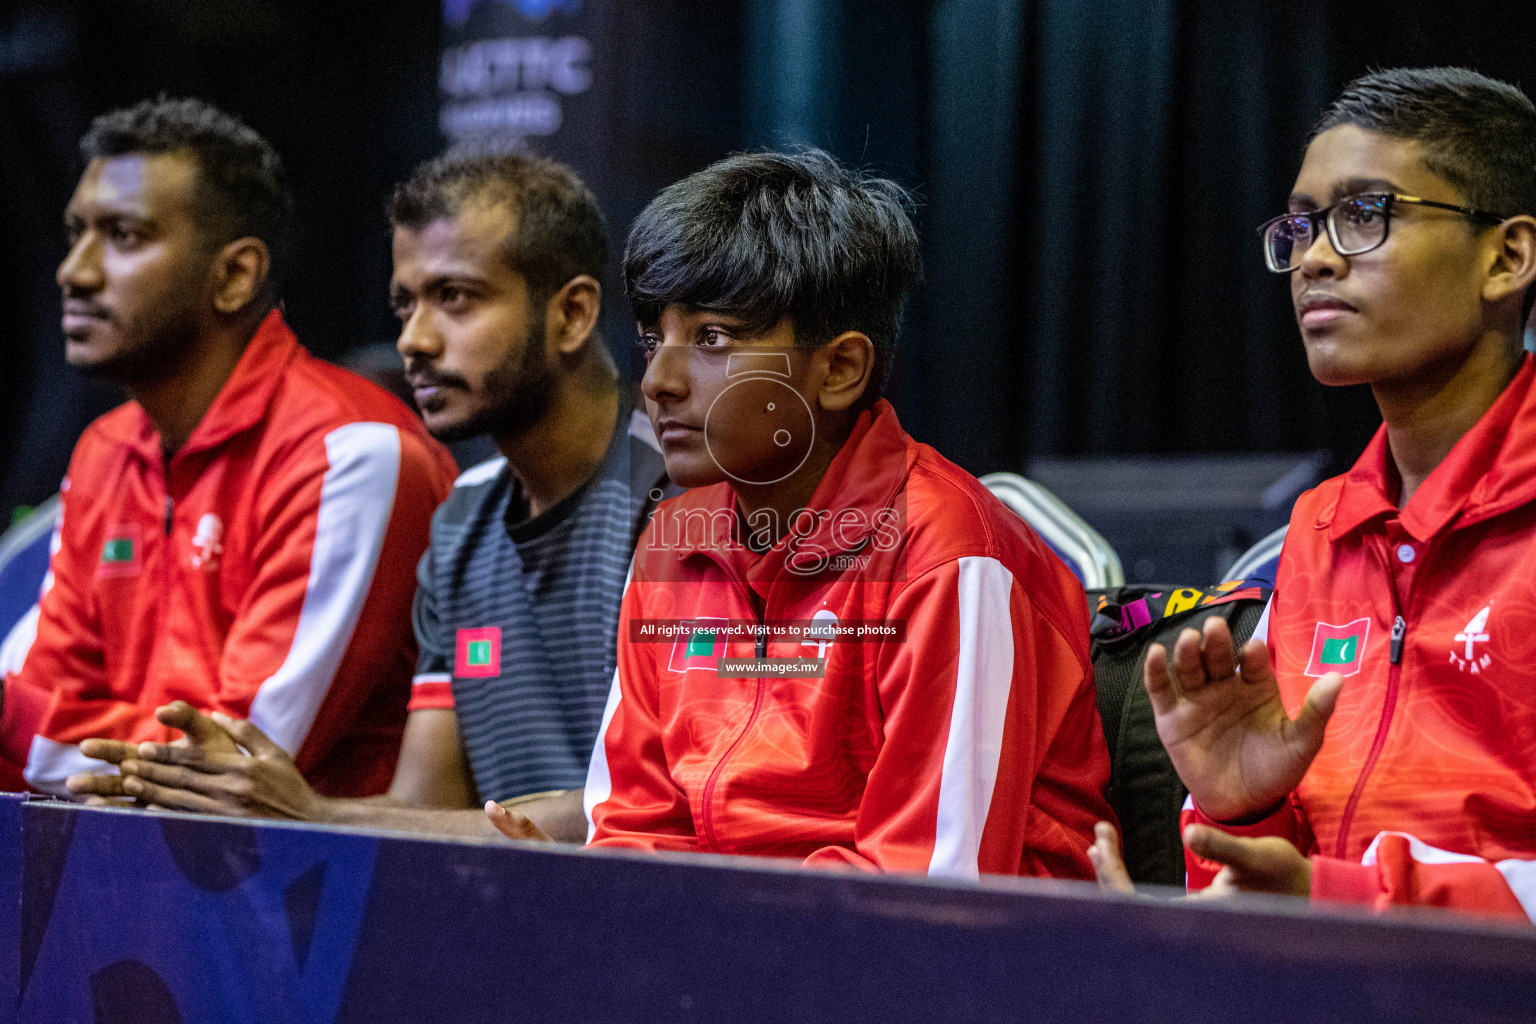 South Asian Junior & Cadet TT Championship Day 1 Male’ Maldives 9th - 11th May 2022, Social Center photos by Nausham Waheed